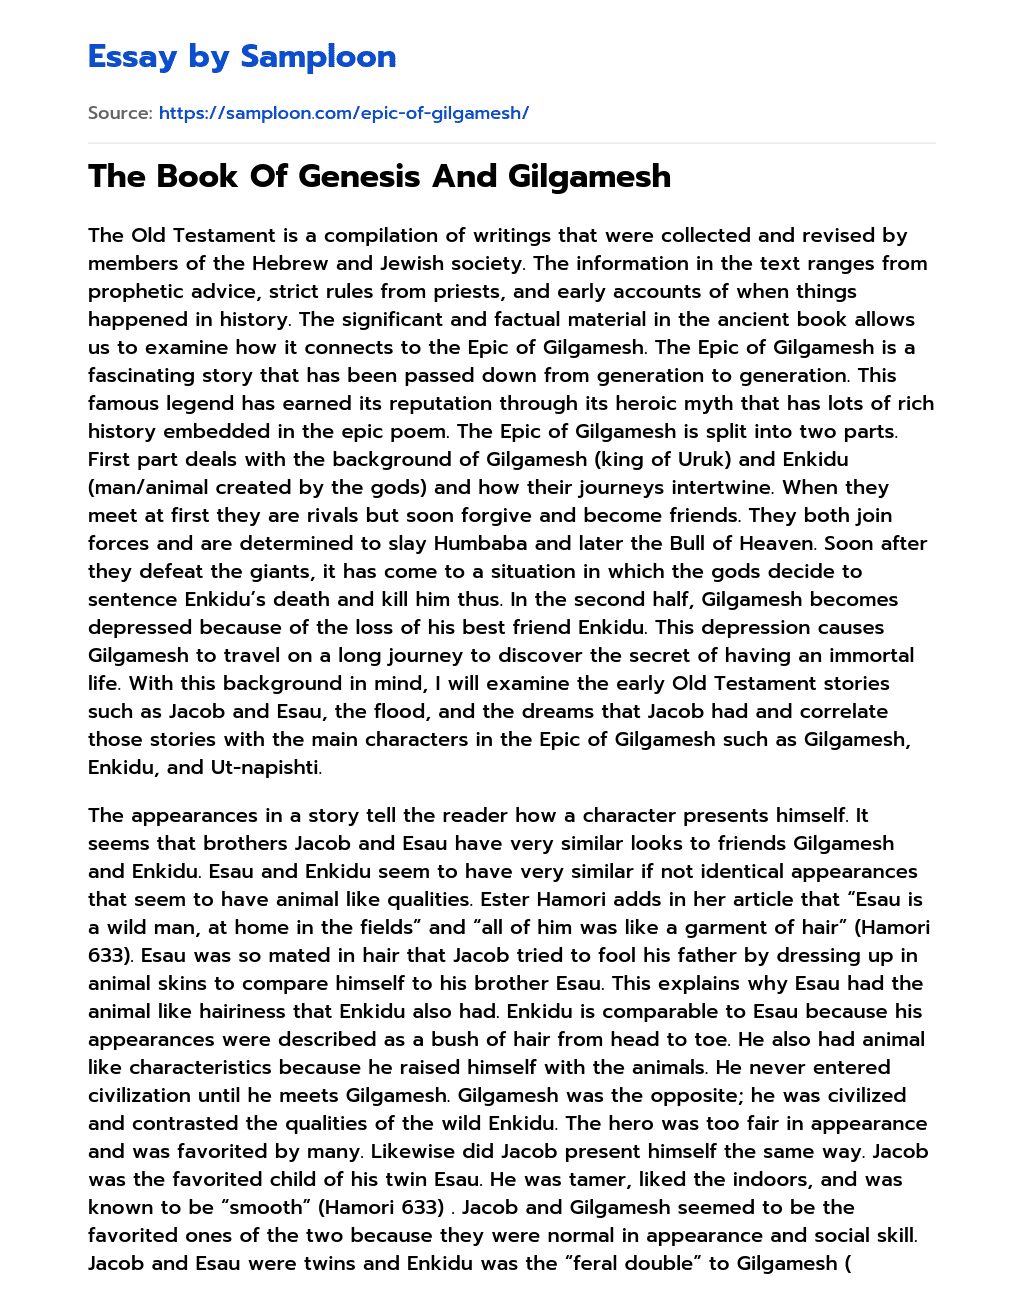 The Book Of Genesis And Gilgamesh essay